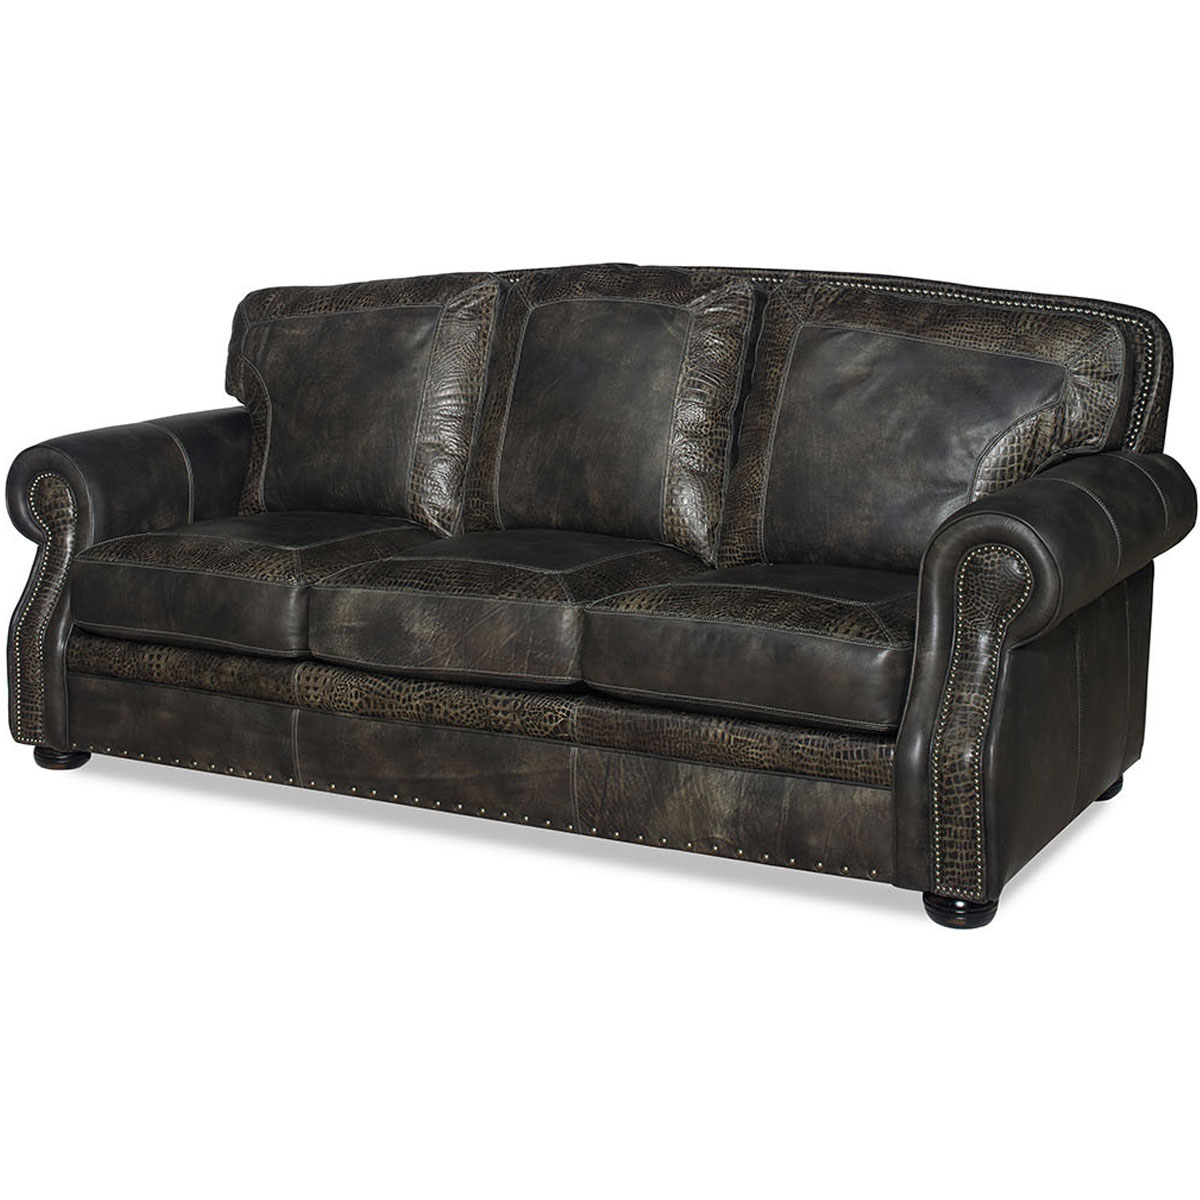 558 Westwood Sofa by CC Leather